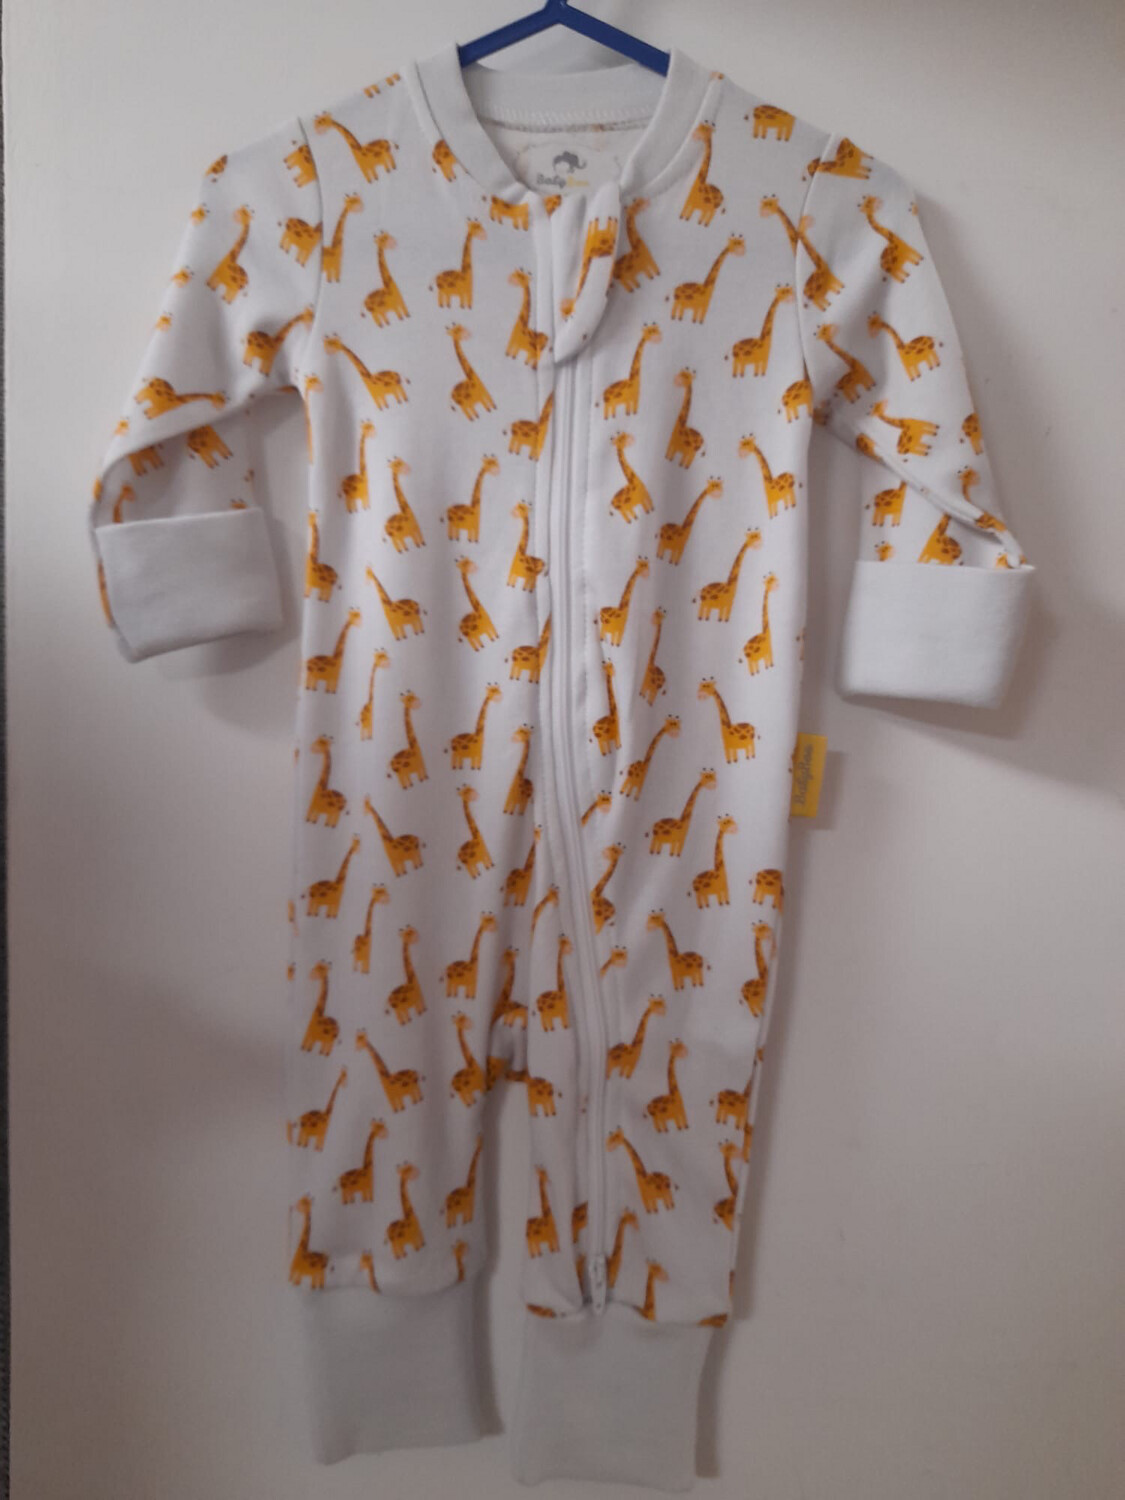 BABYBOO  Giraffe’s Organic Cotton zippyboo suit size 6-9 Months